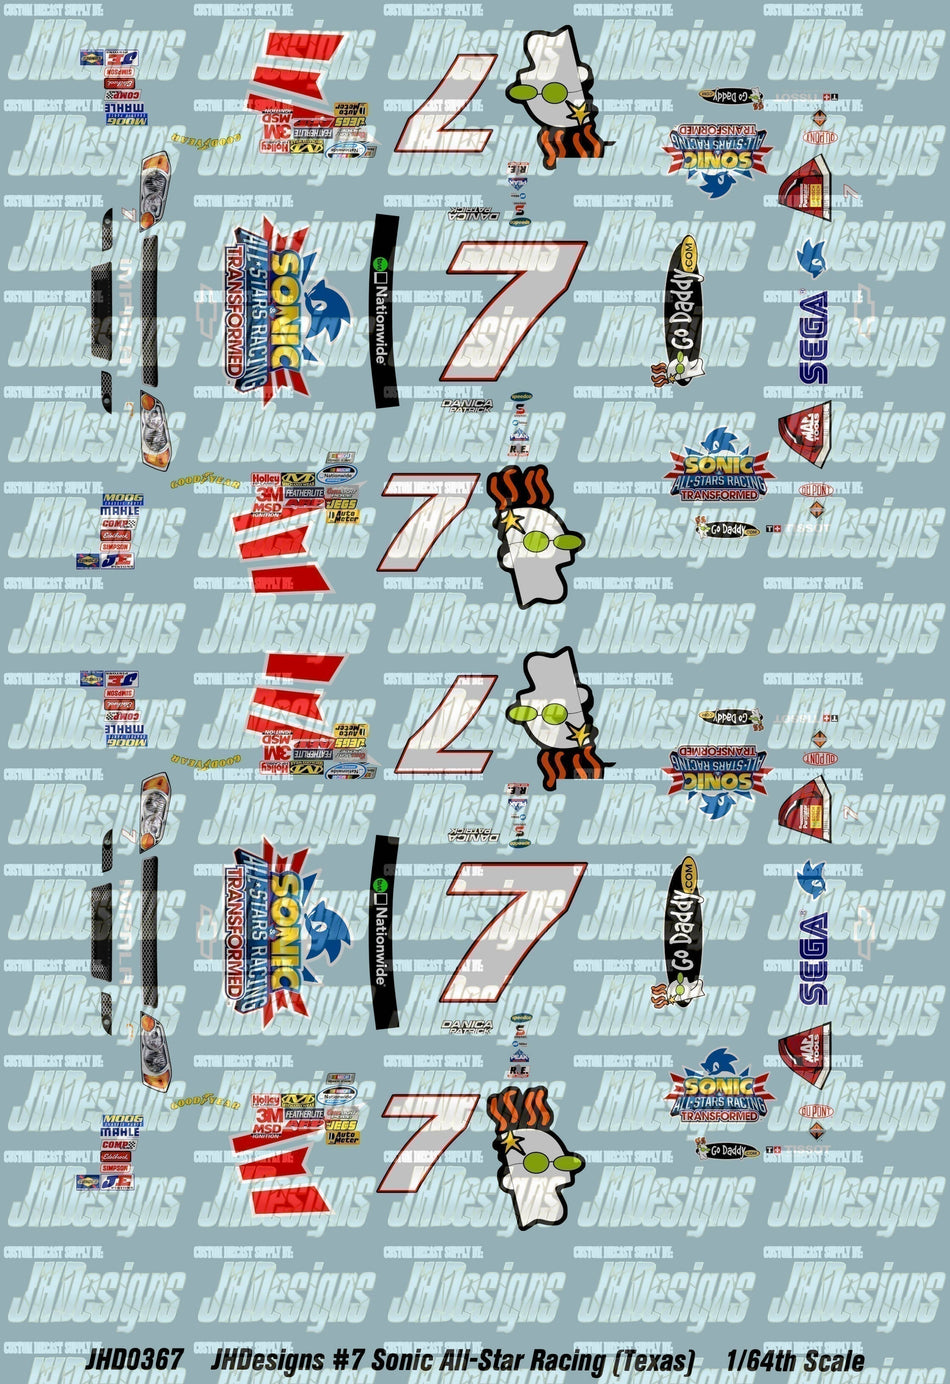 JH Designs Danica Patrick 2012 NWS #7 Sonic All-Star Racing (Texas) 1:64 Racecar Decal Set